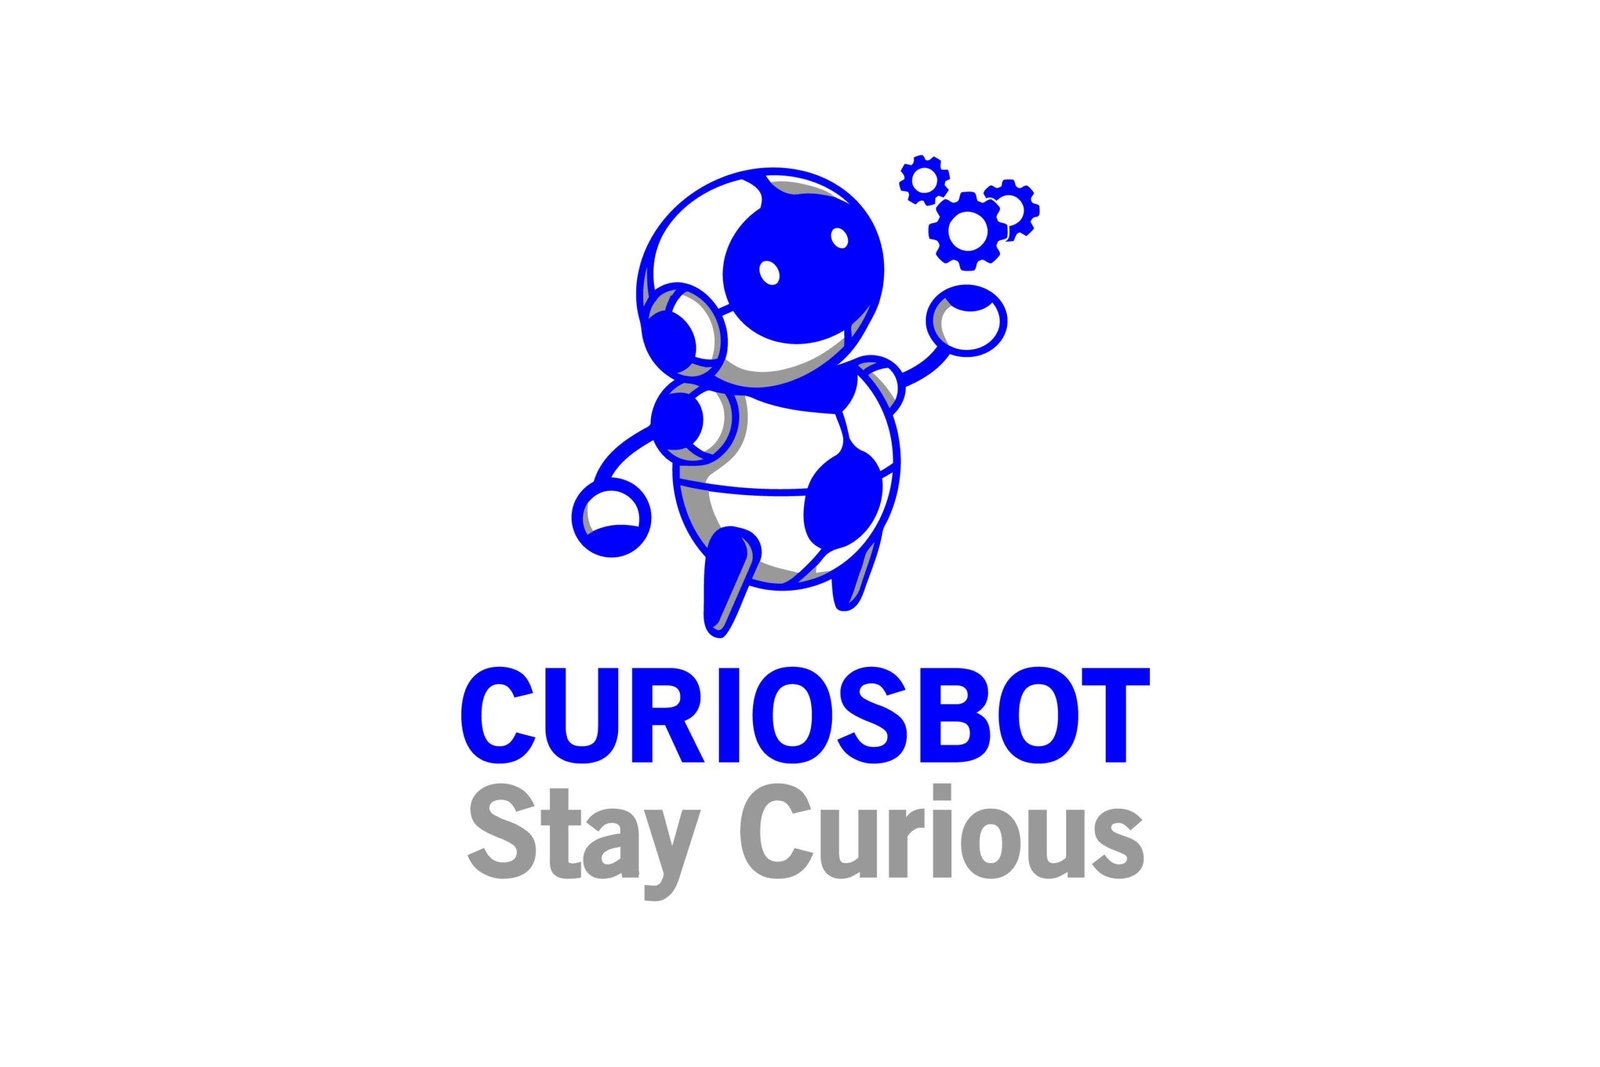 CuriosBot